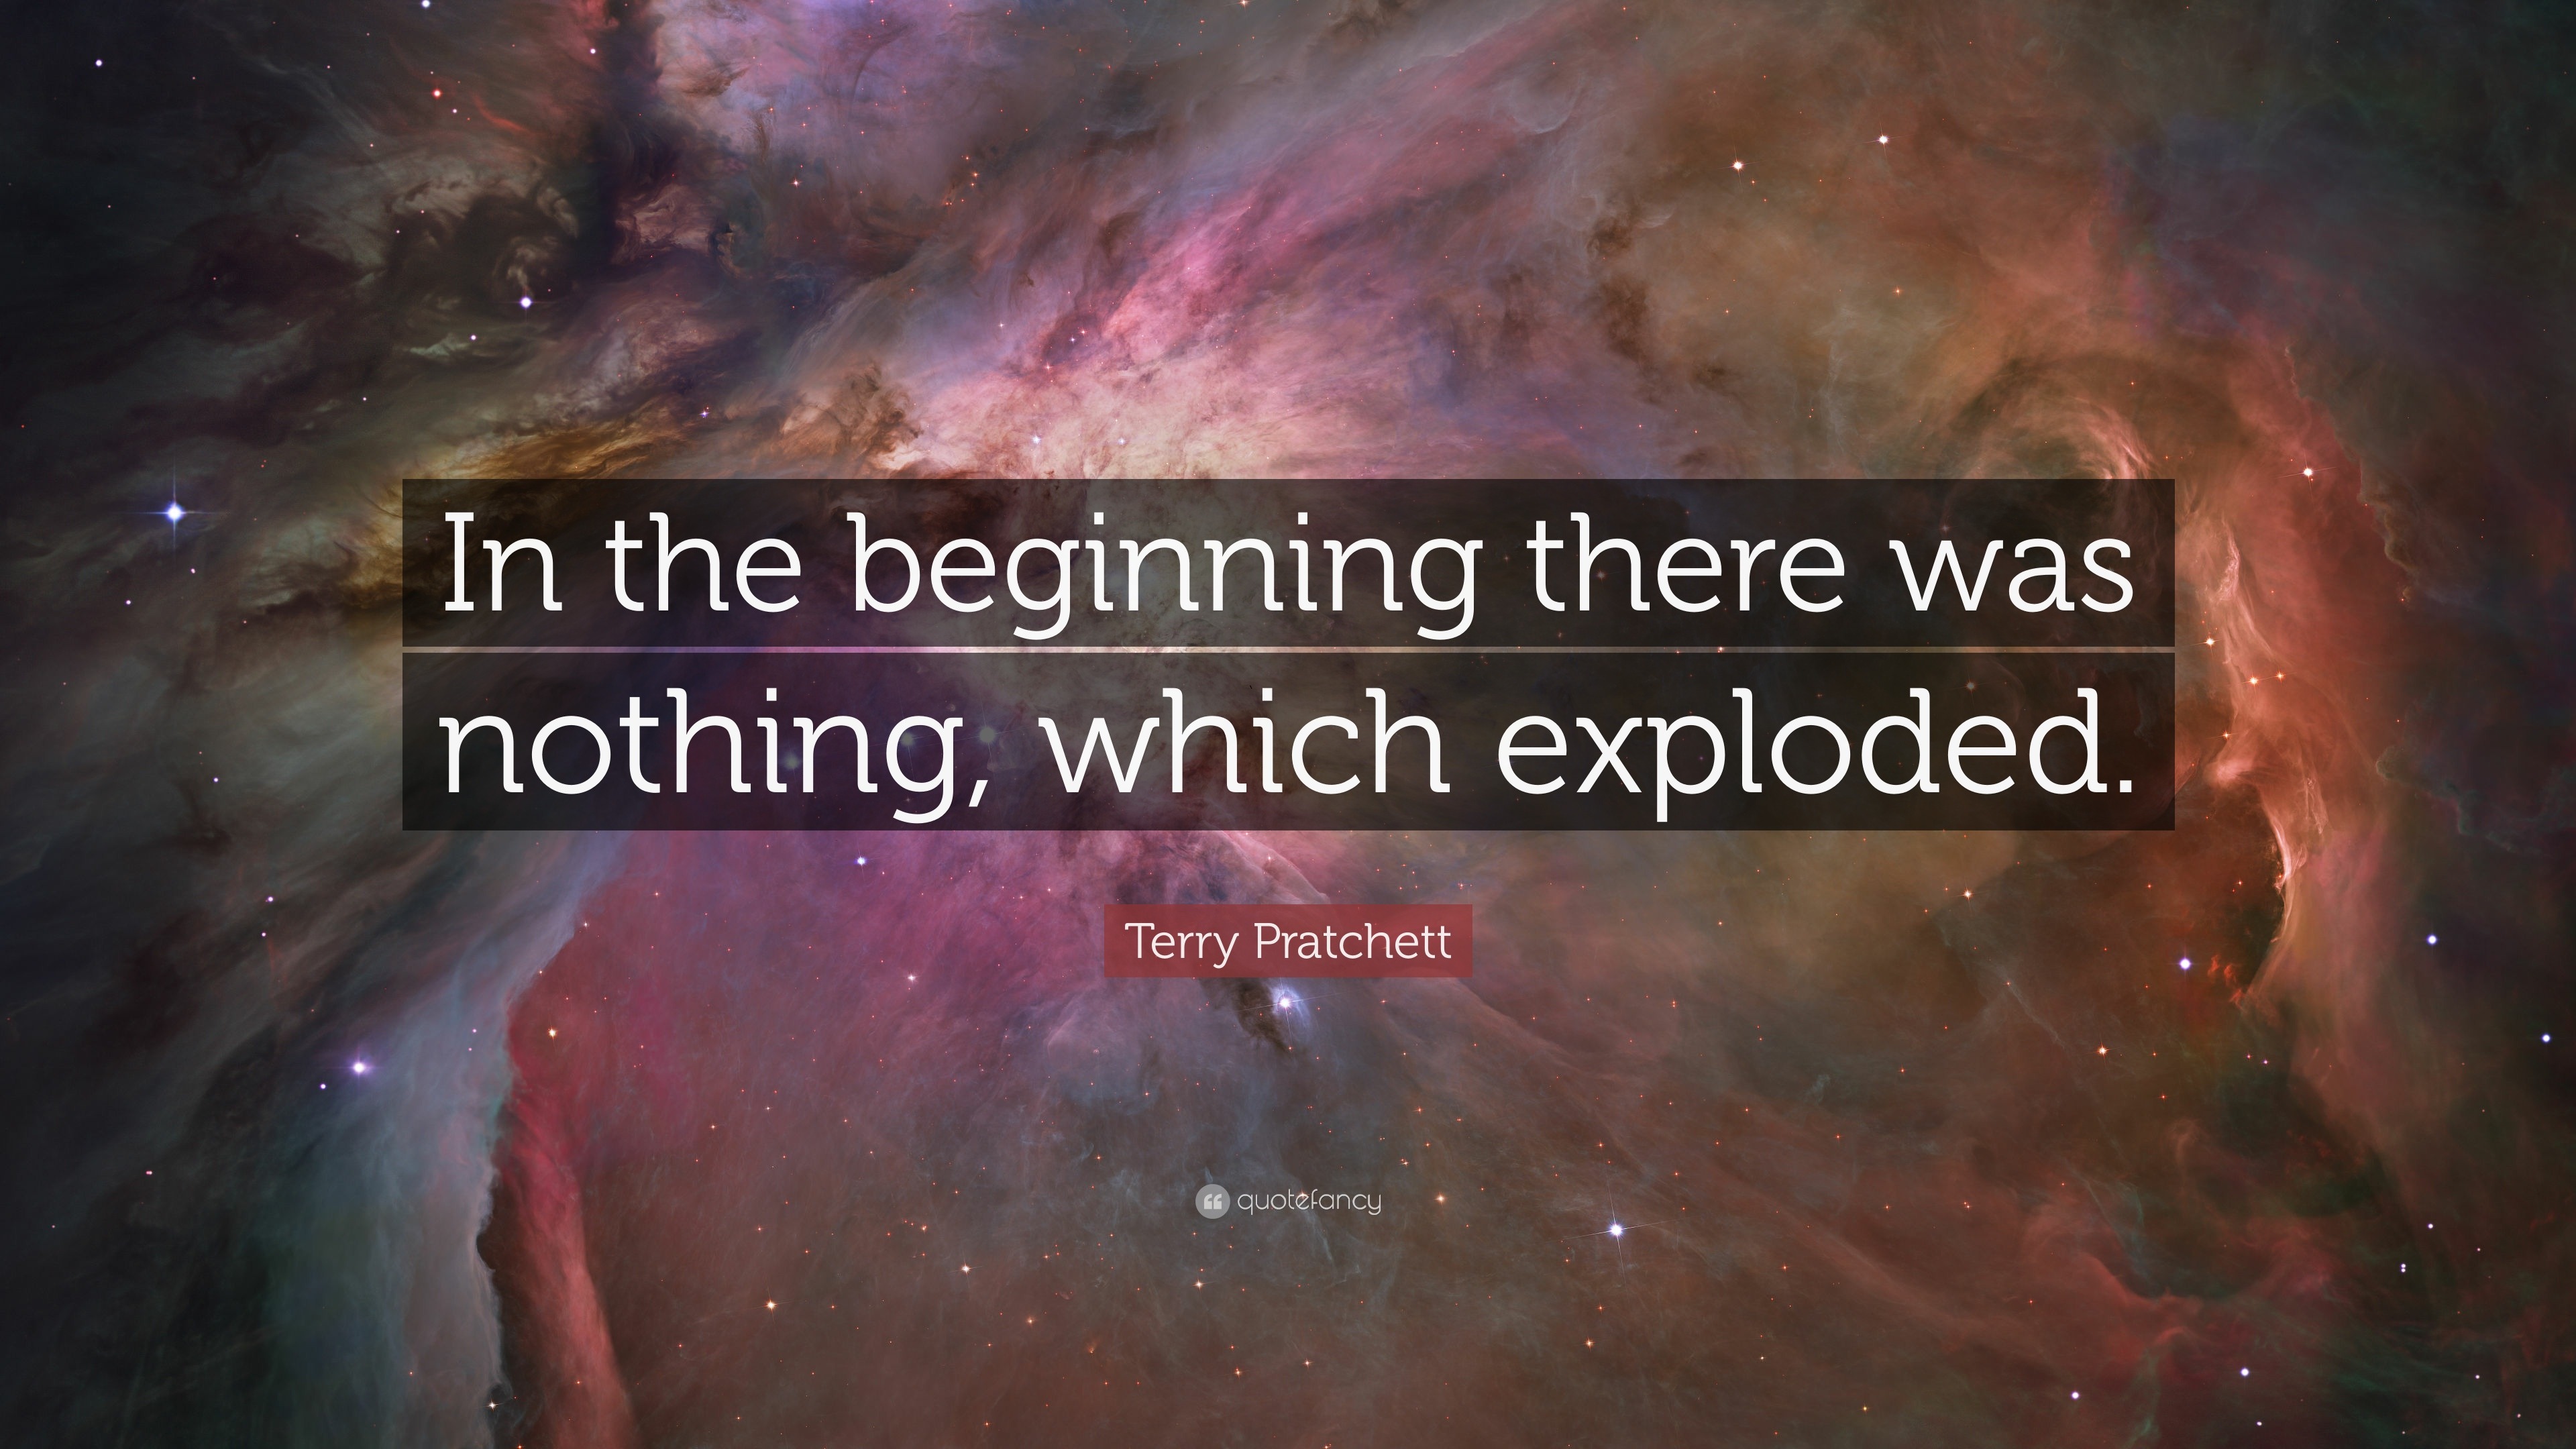 Terry Pratchett Quotes 100 Wallpapers Quotefancy